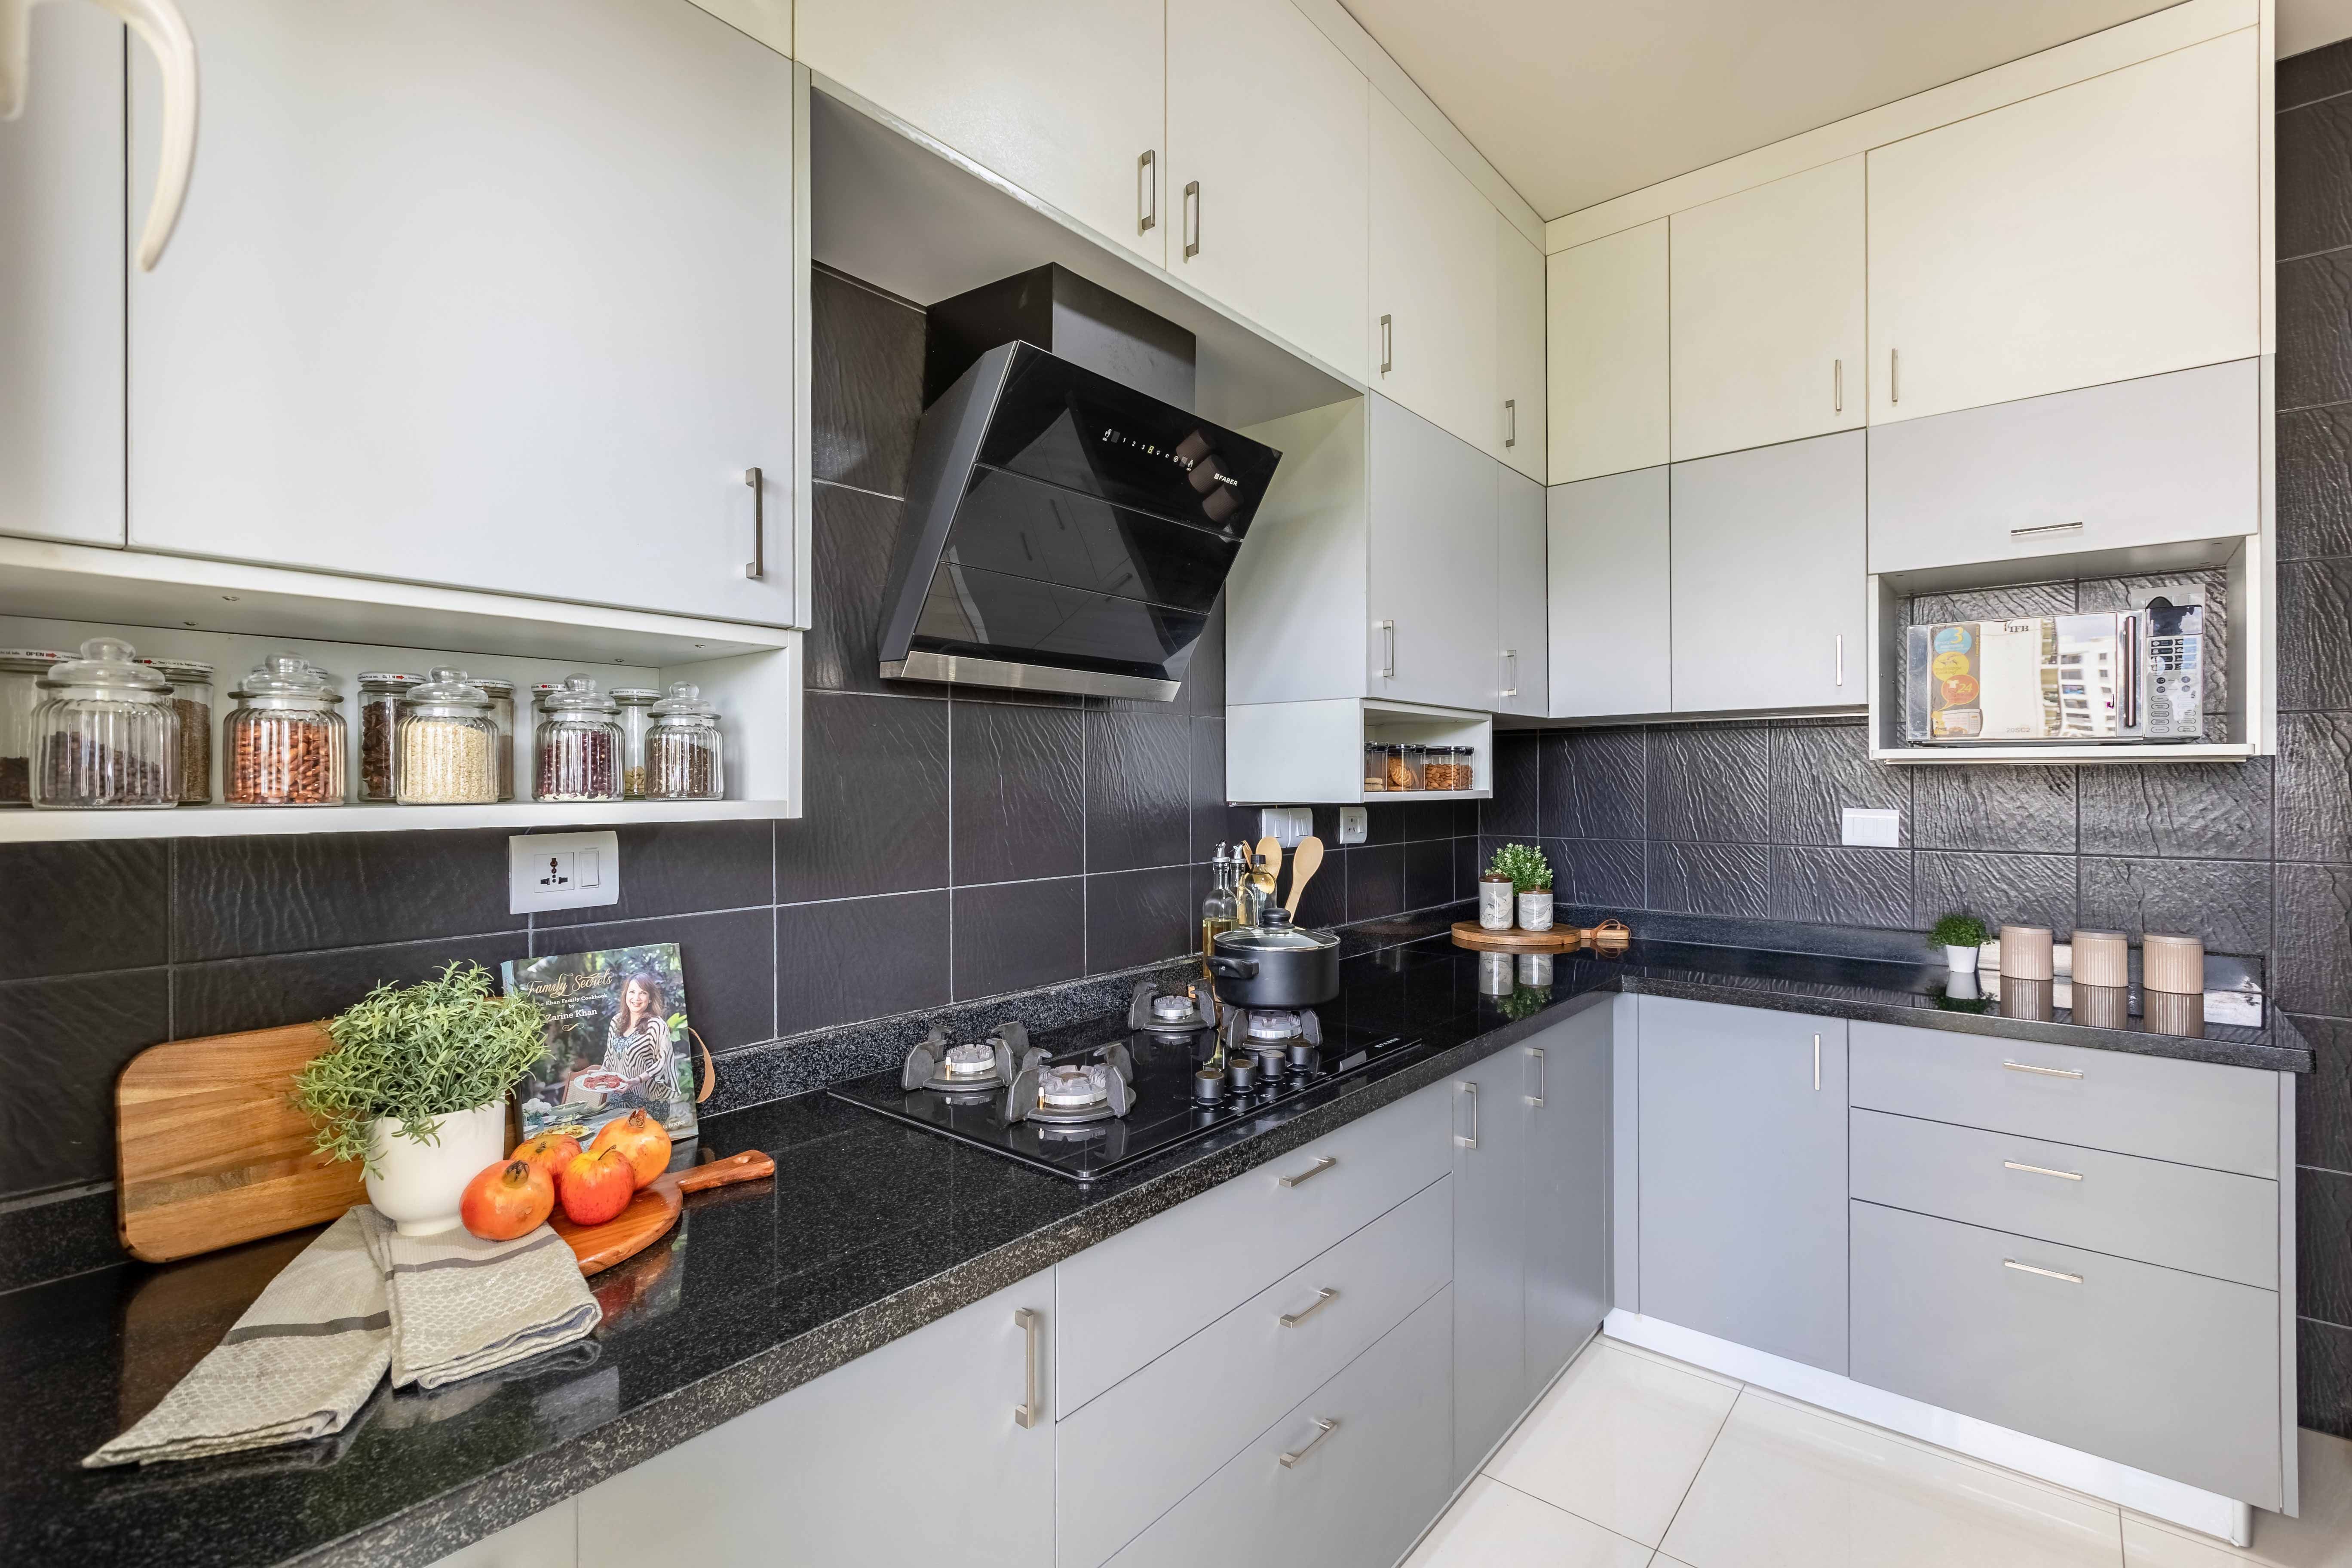 Modern Modular L-Shaped Kitchen Cabinet Design With Black Dado Tiles